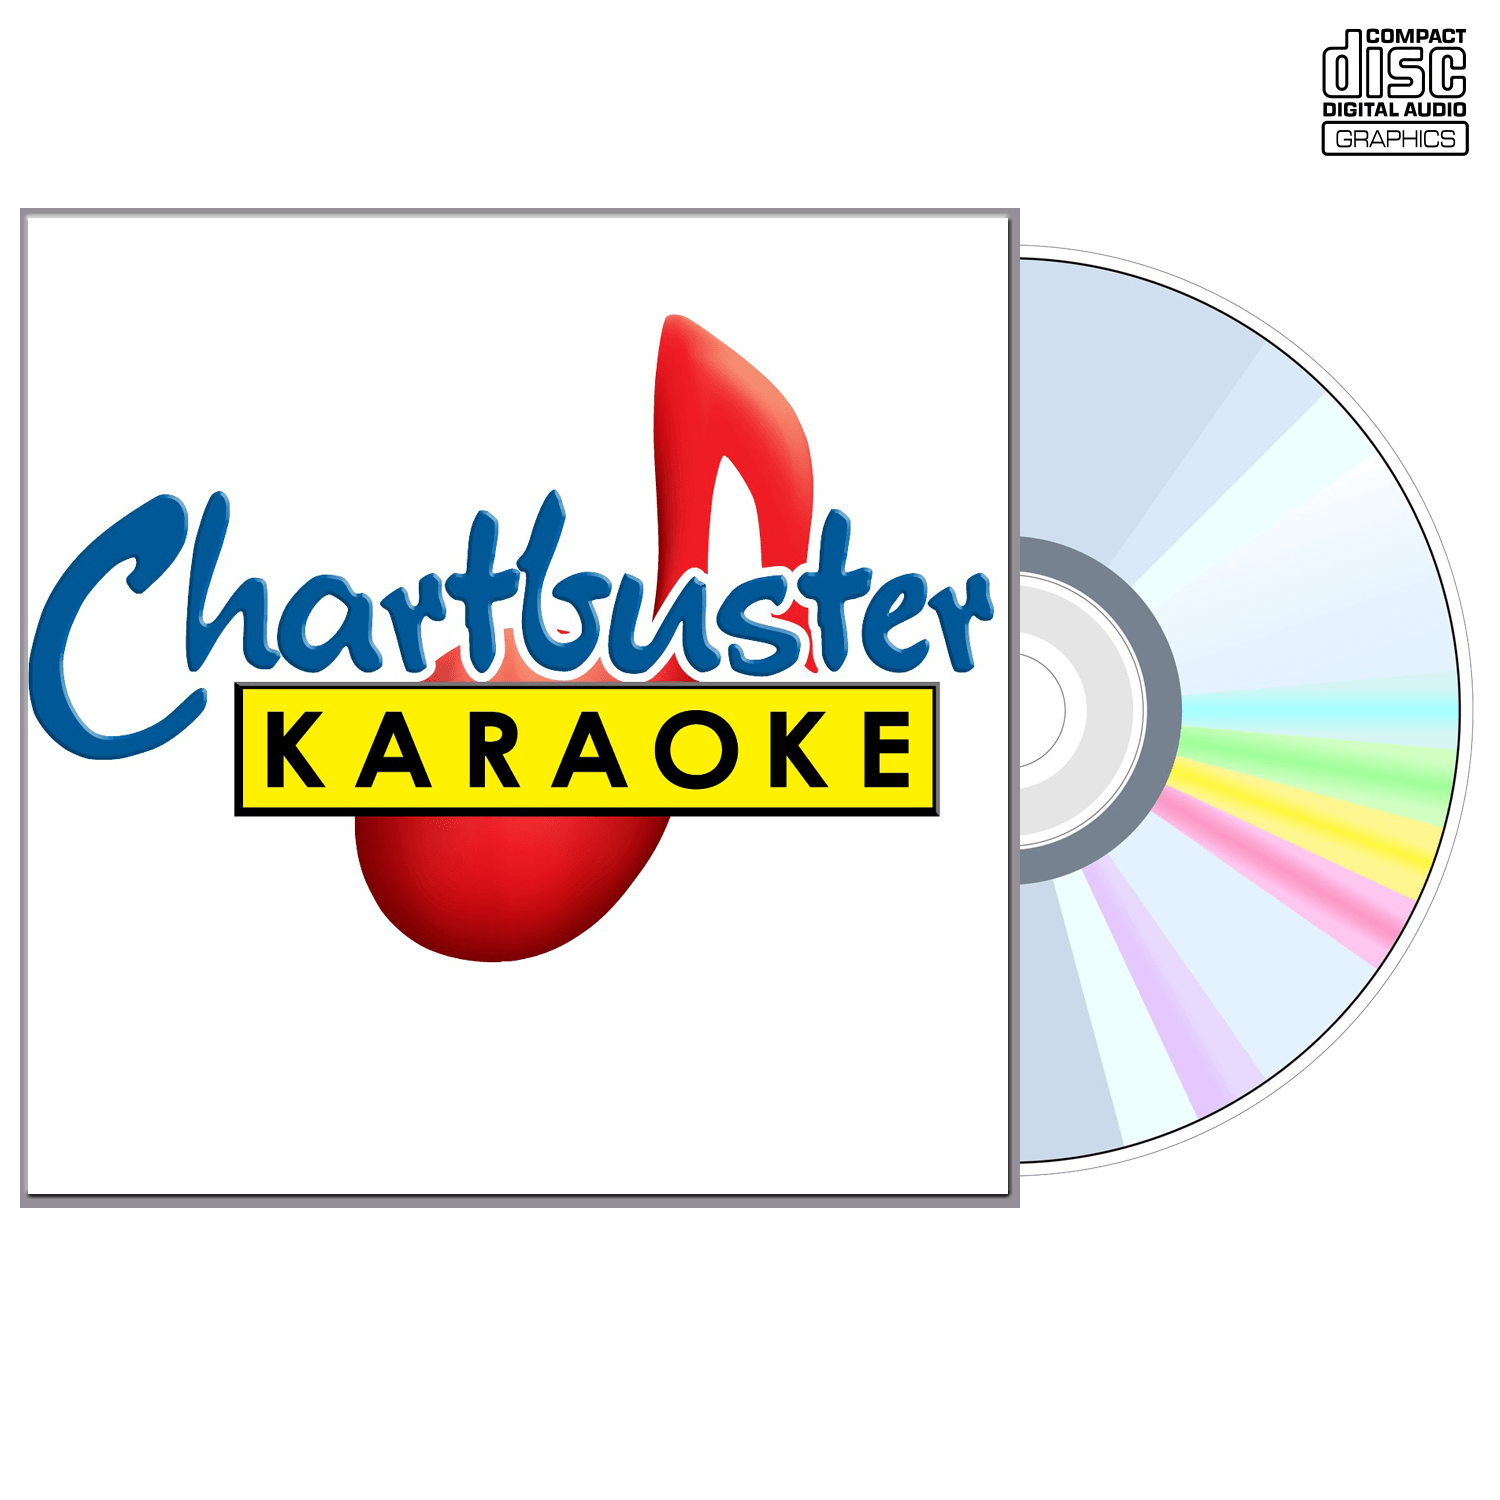 Ultimate Rock N Roll Vol 3 - CD+G - Chartbuster Karaoke - Karaoke Home Entertainment